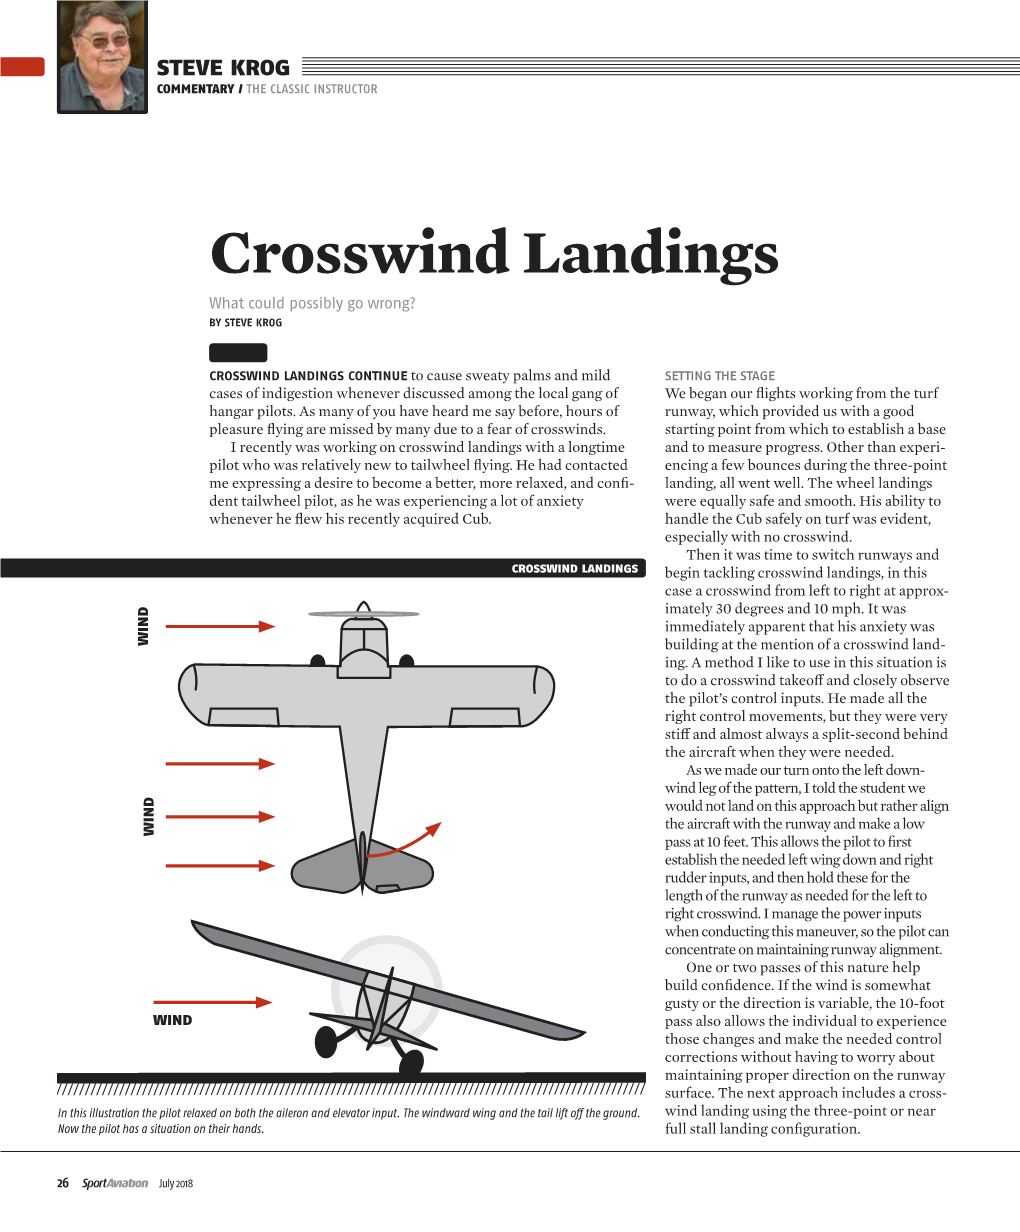 Crosswind Landings What Could Possibly Go Wrong? by STEVE KROG